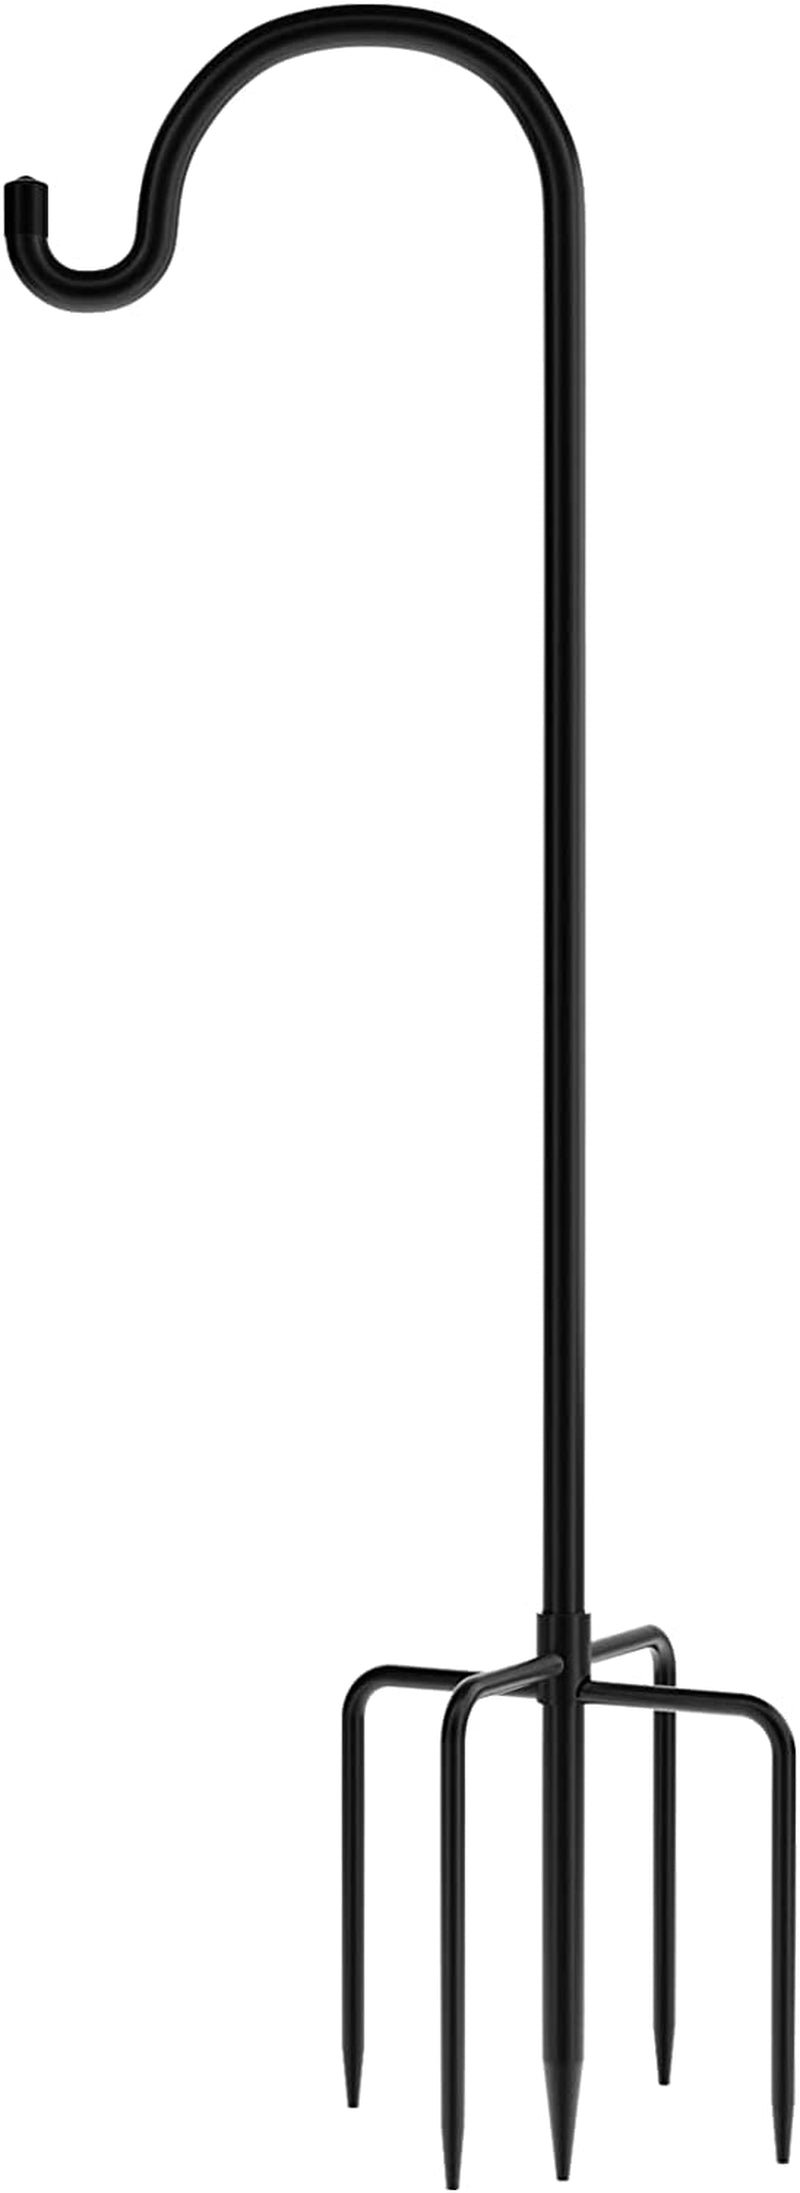 Gtongoko, Gtongoko Shepards Hooks for Outdoor 92 Inch, Tall Bird Feeder Pole, Adjustable Shepherds Hooks for Hanging Plant Baskets, Lanterns, Weddings Decor, Solar Lights, Black,1 Pack